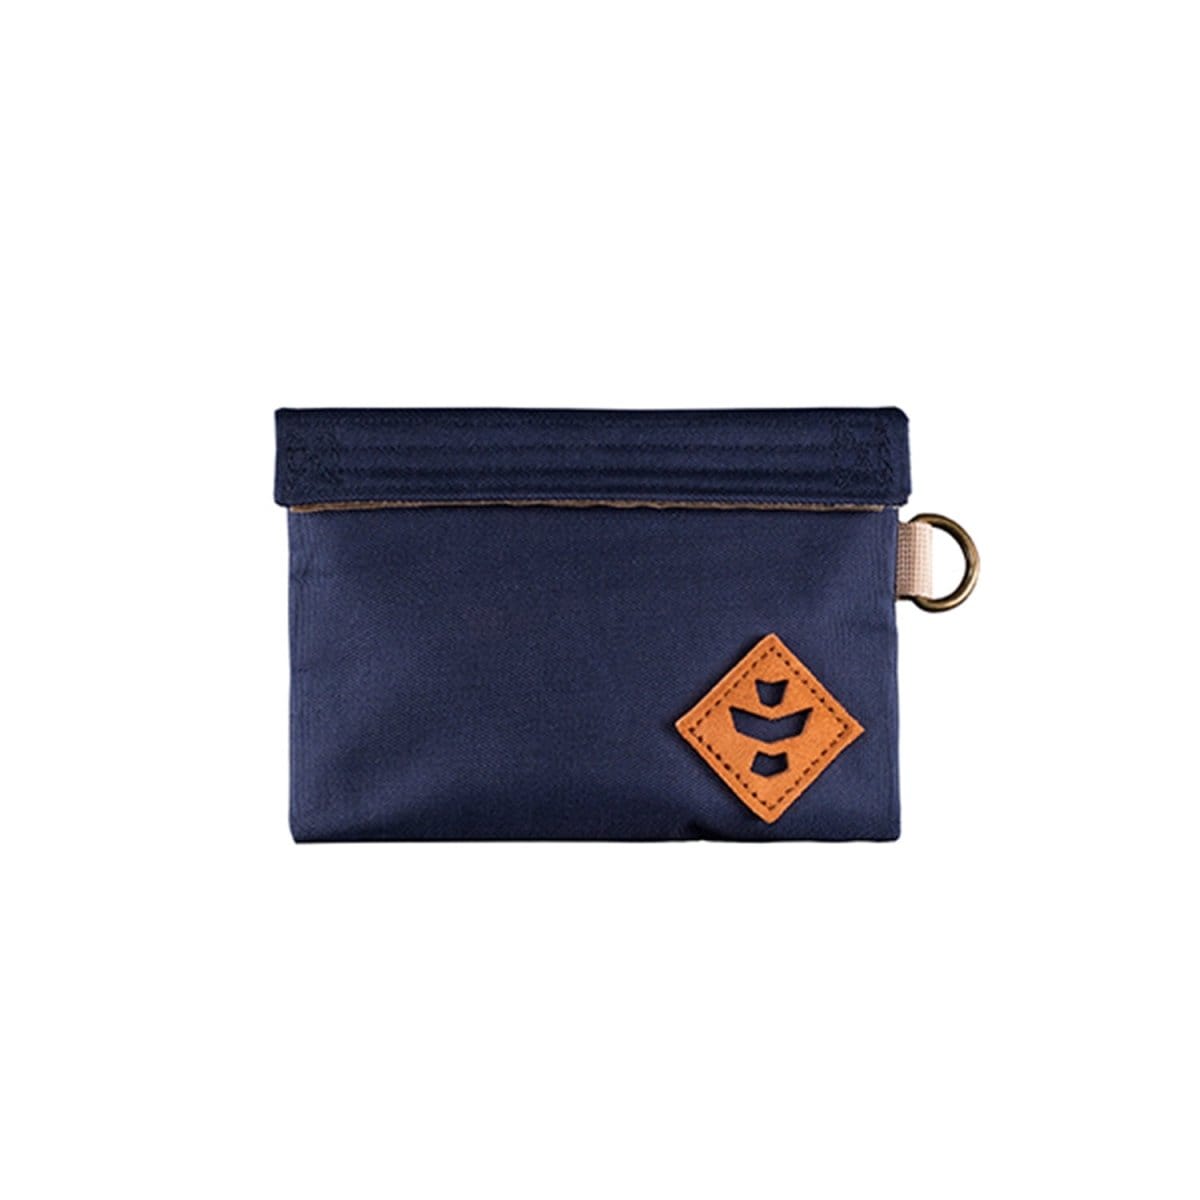 Revelry Supply Travel Bag Navy Blue The Mini Confidant - Smell Proof Small Stash Bag